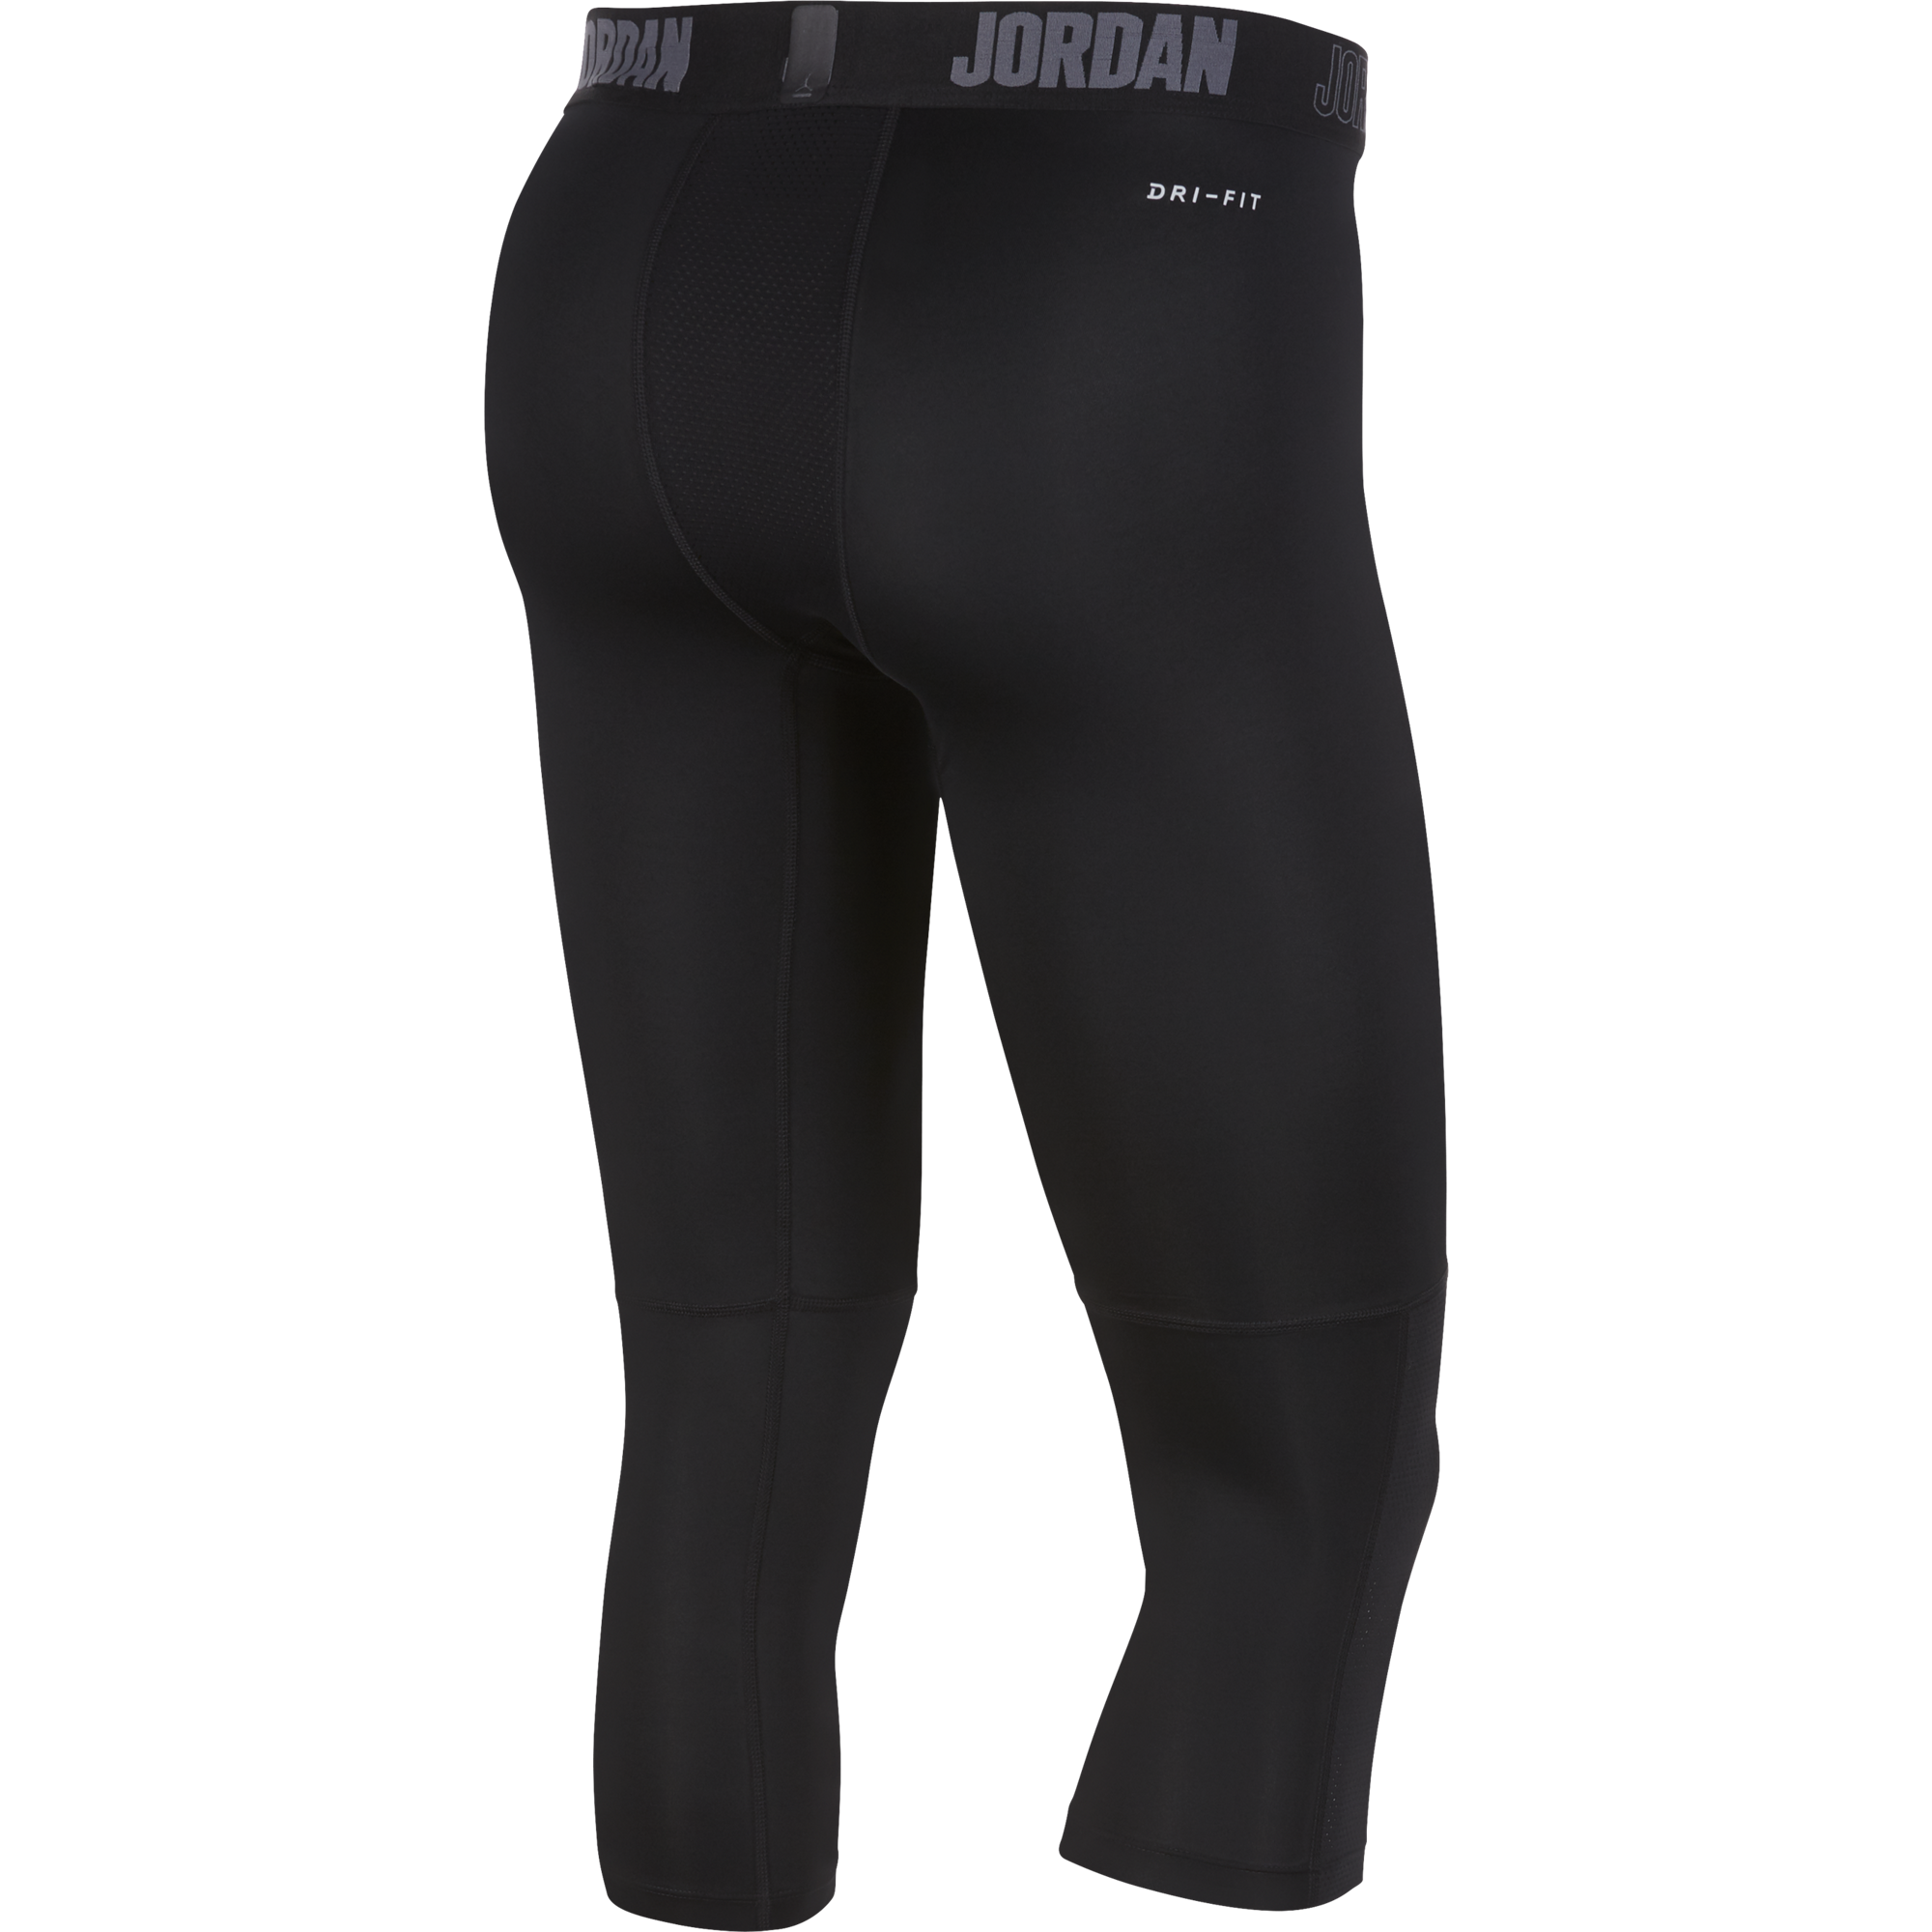 Nike Air Jordan 23 Alpha 3/4 Training Tights Gray AJ1910-060 Men's